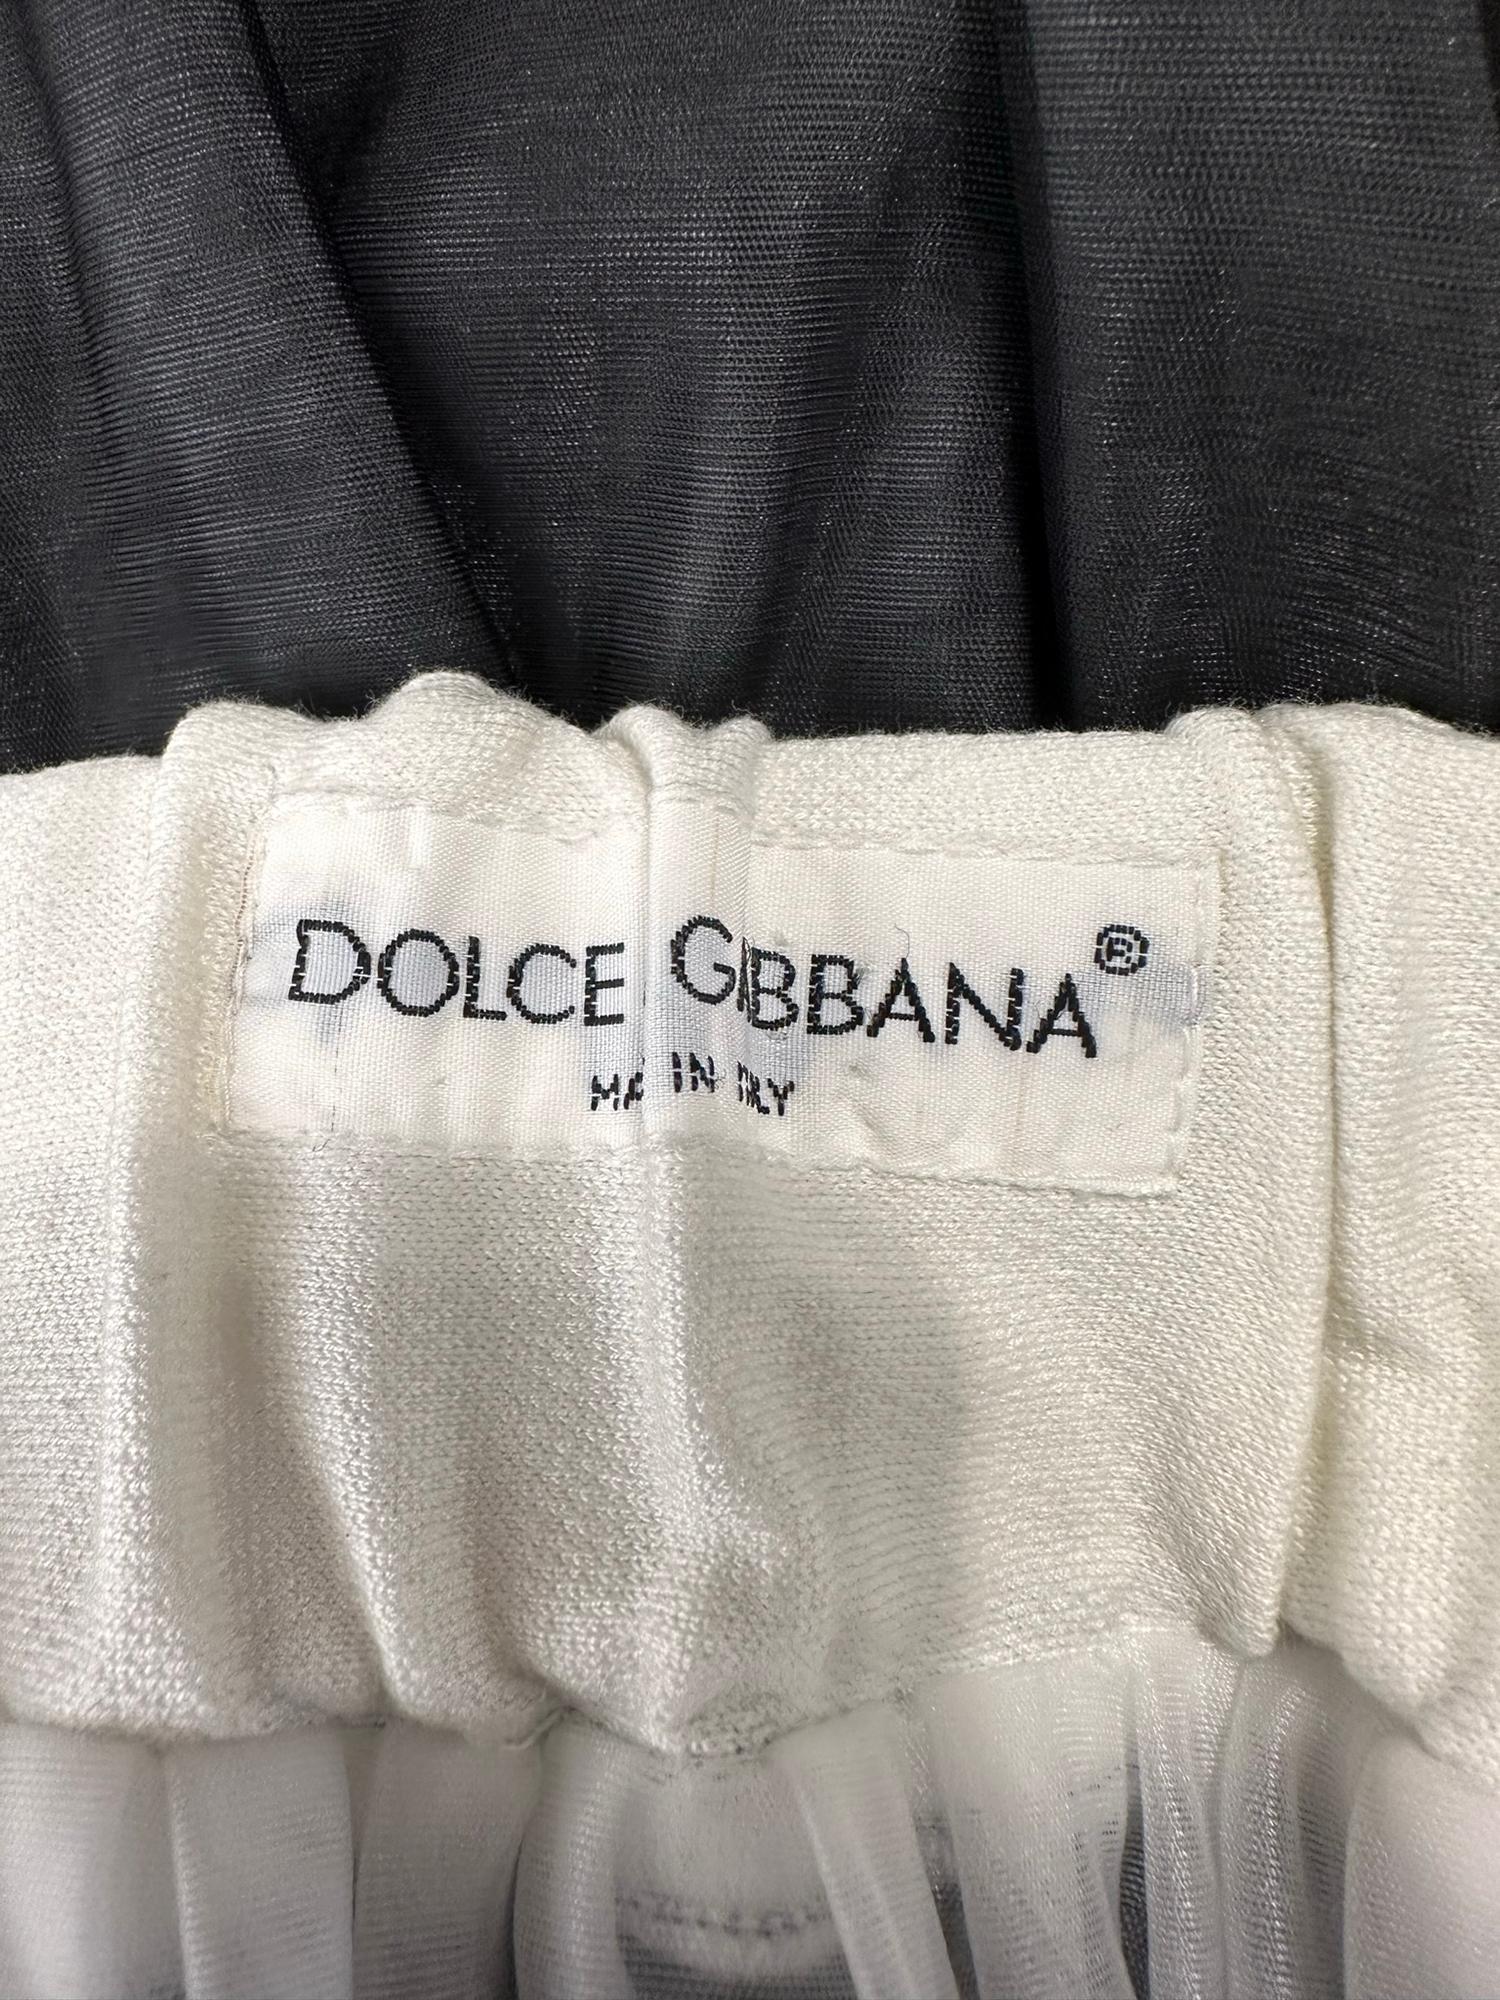 Dolce & Gabbana Sheer Black & White Nylon Athleisure Over size Top & Maxi Skirt  For Sale 10